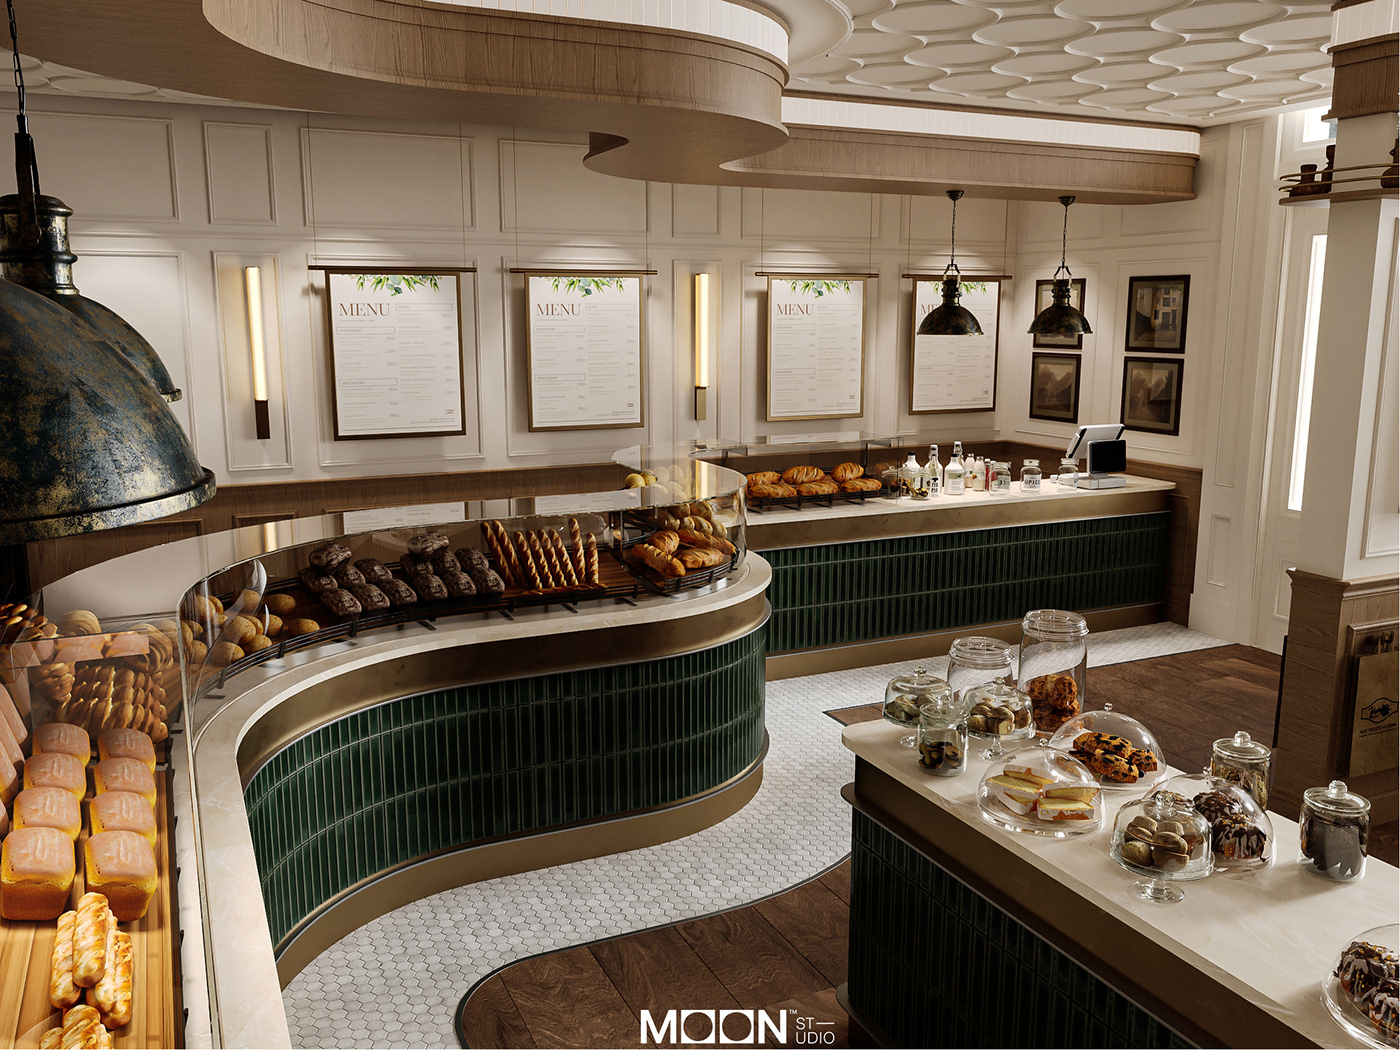 bakery bakery design  bakery shop interior design  Interior design visualization Studia54 tolko bakerydesign